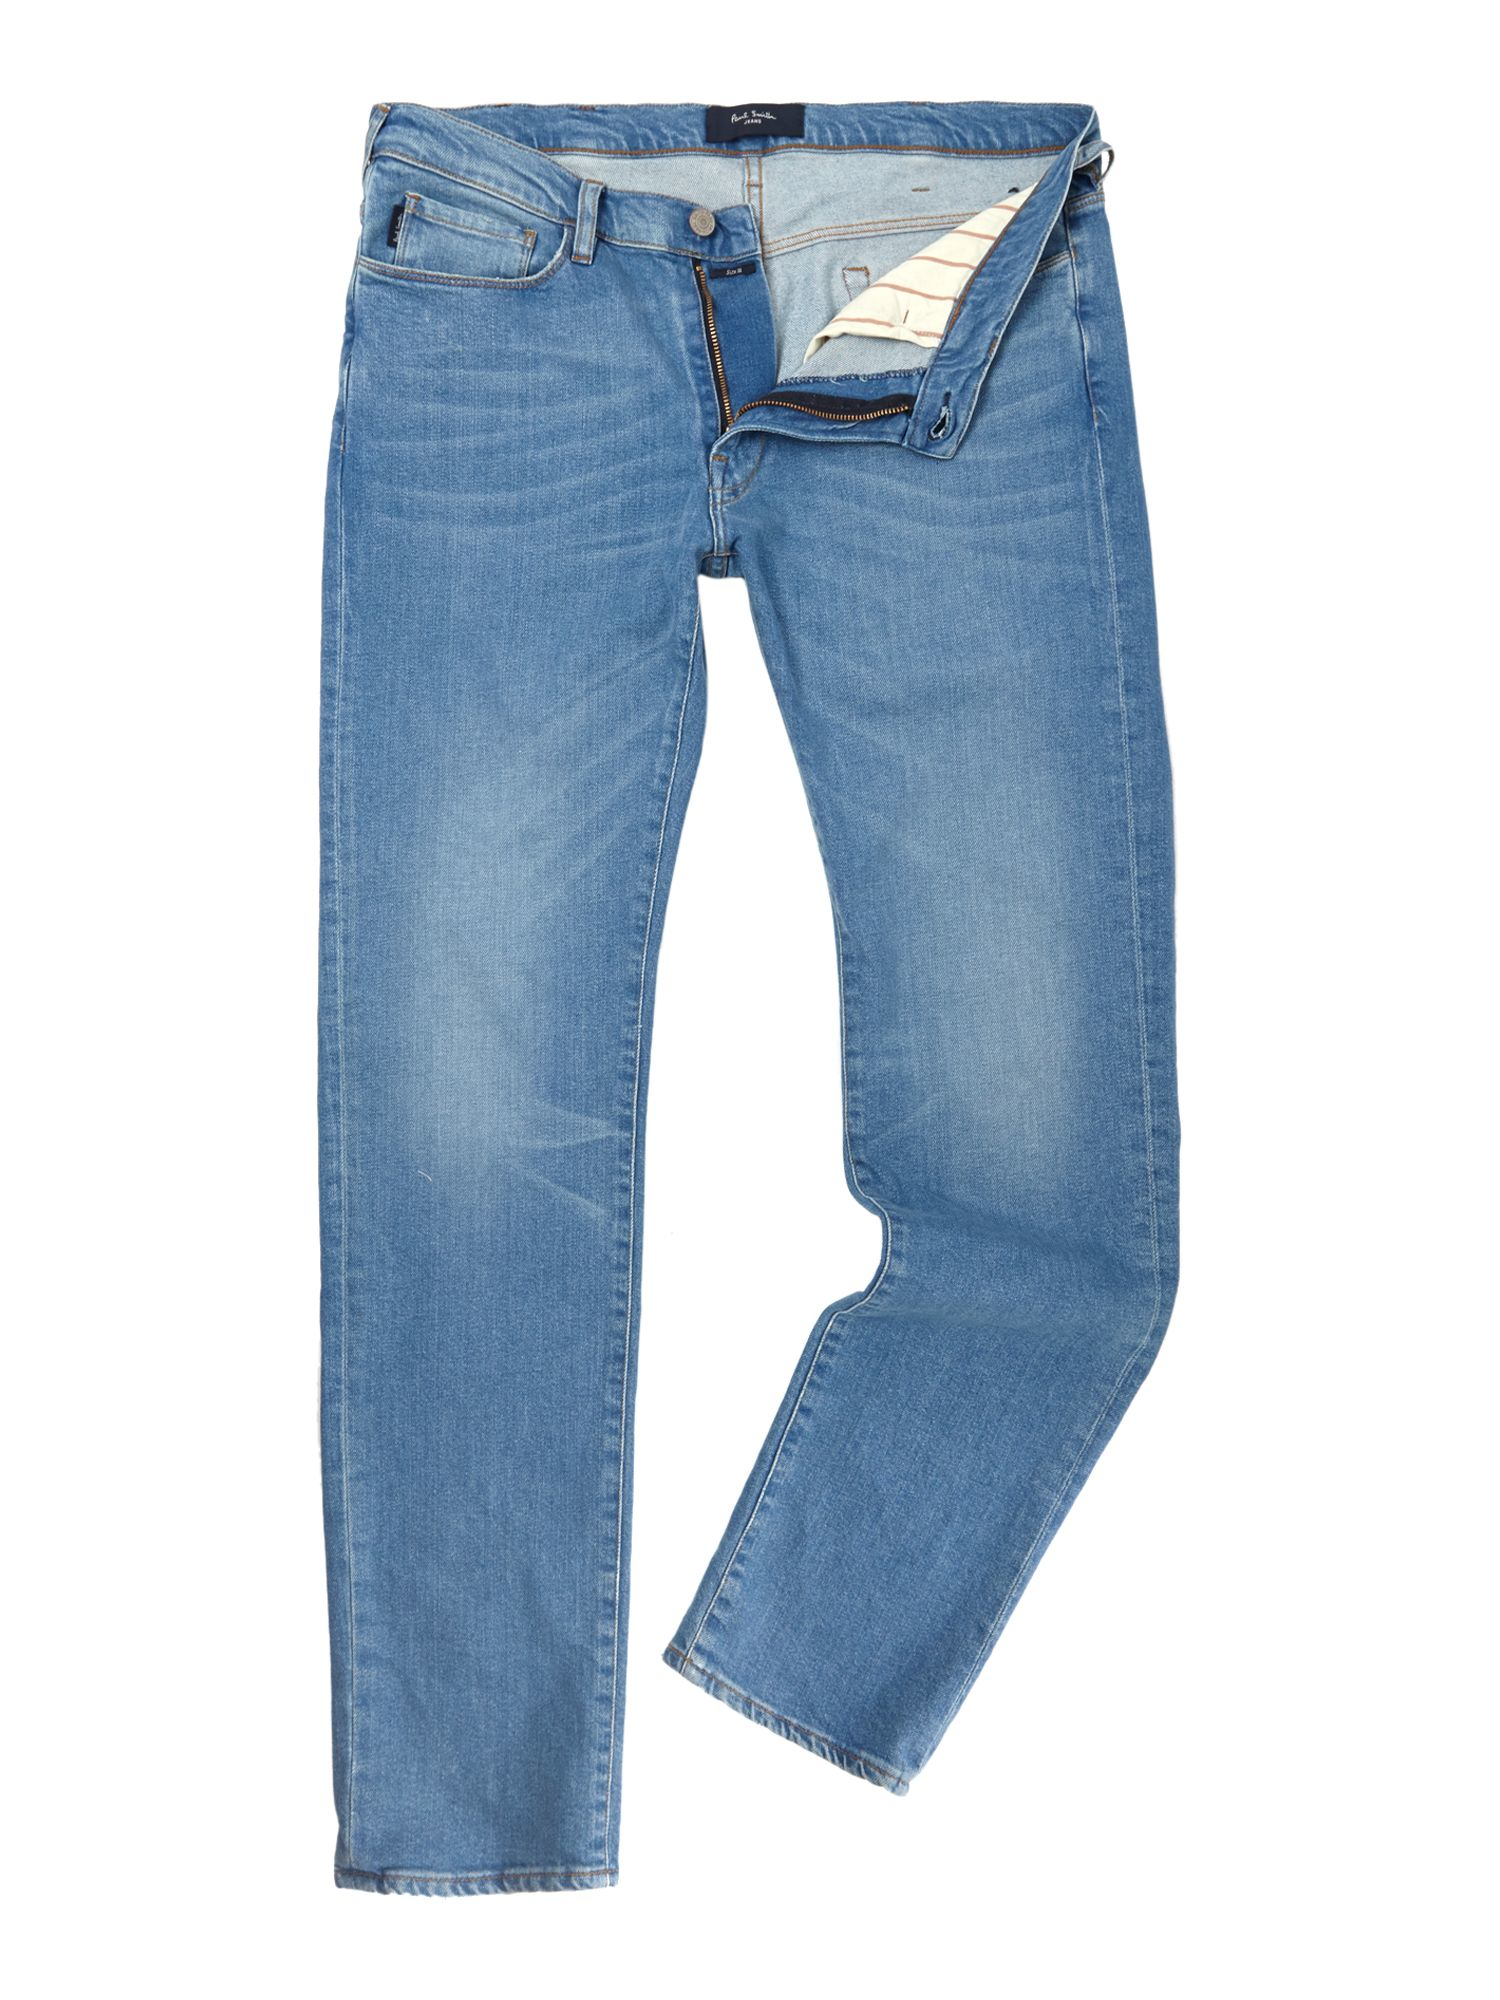 Paul smith Slim Fit Light Wash Denim Jeans in Blue for Men | Lyst